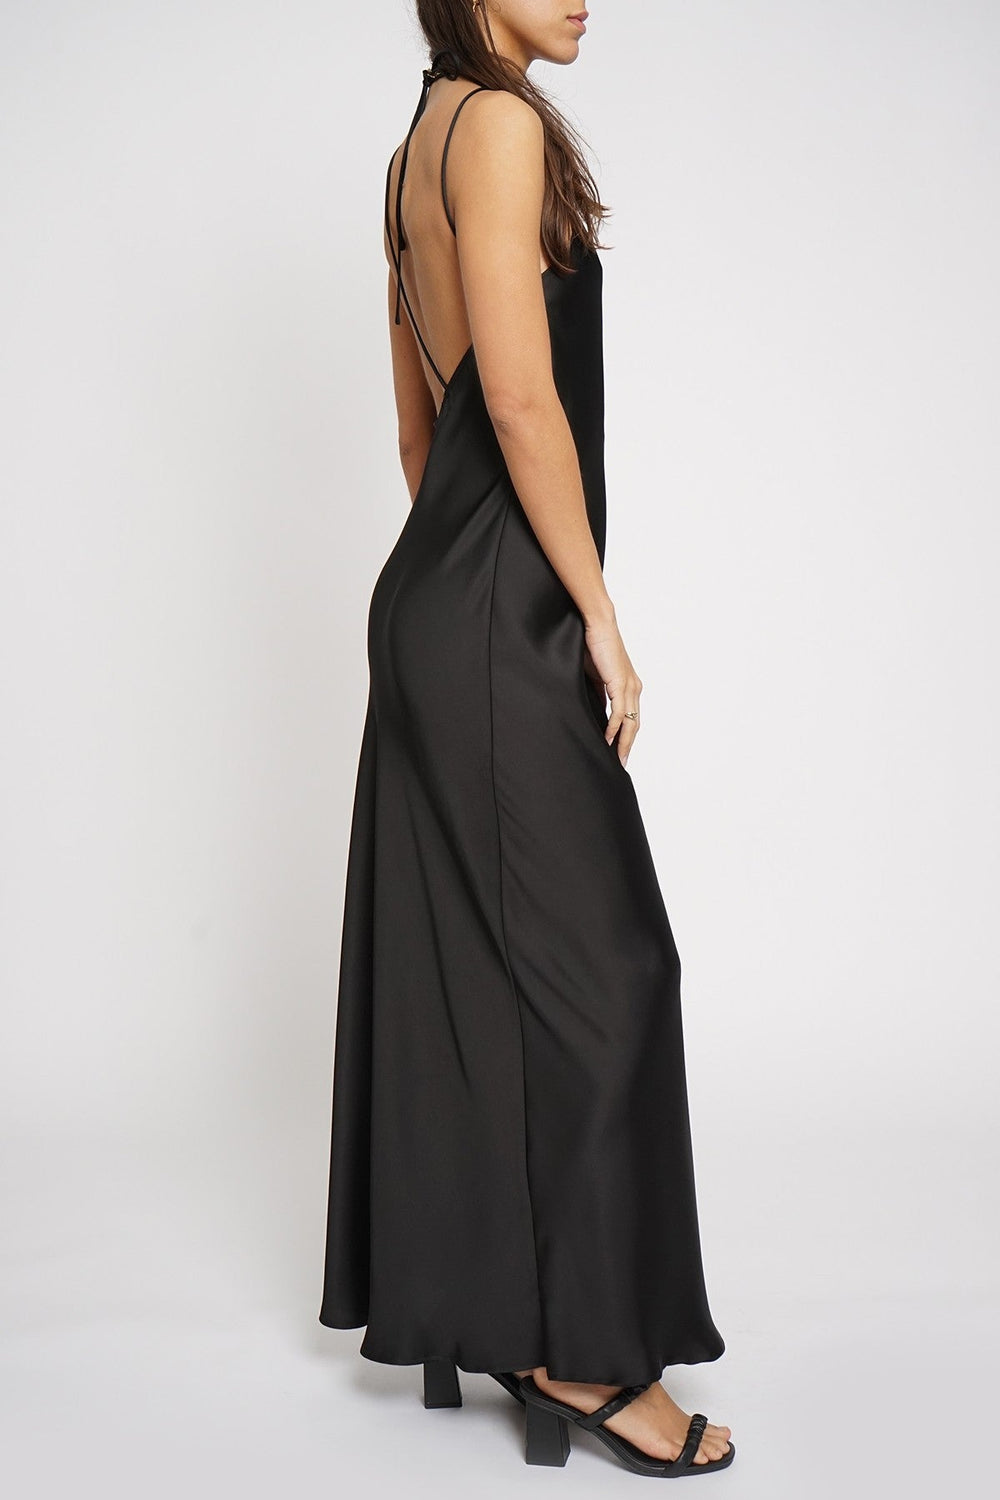 Tamara - negro - Lend the Trend renta de vestidos mexico